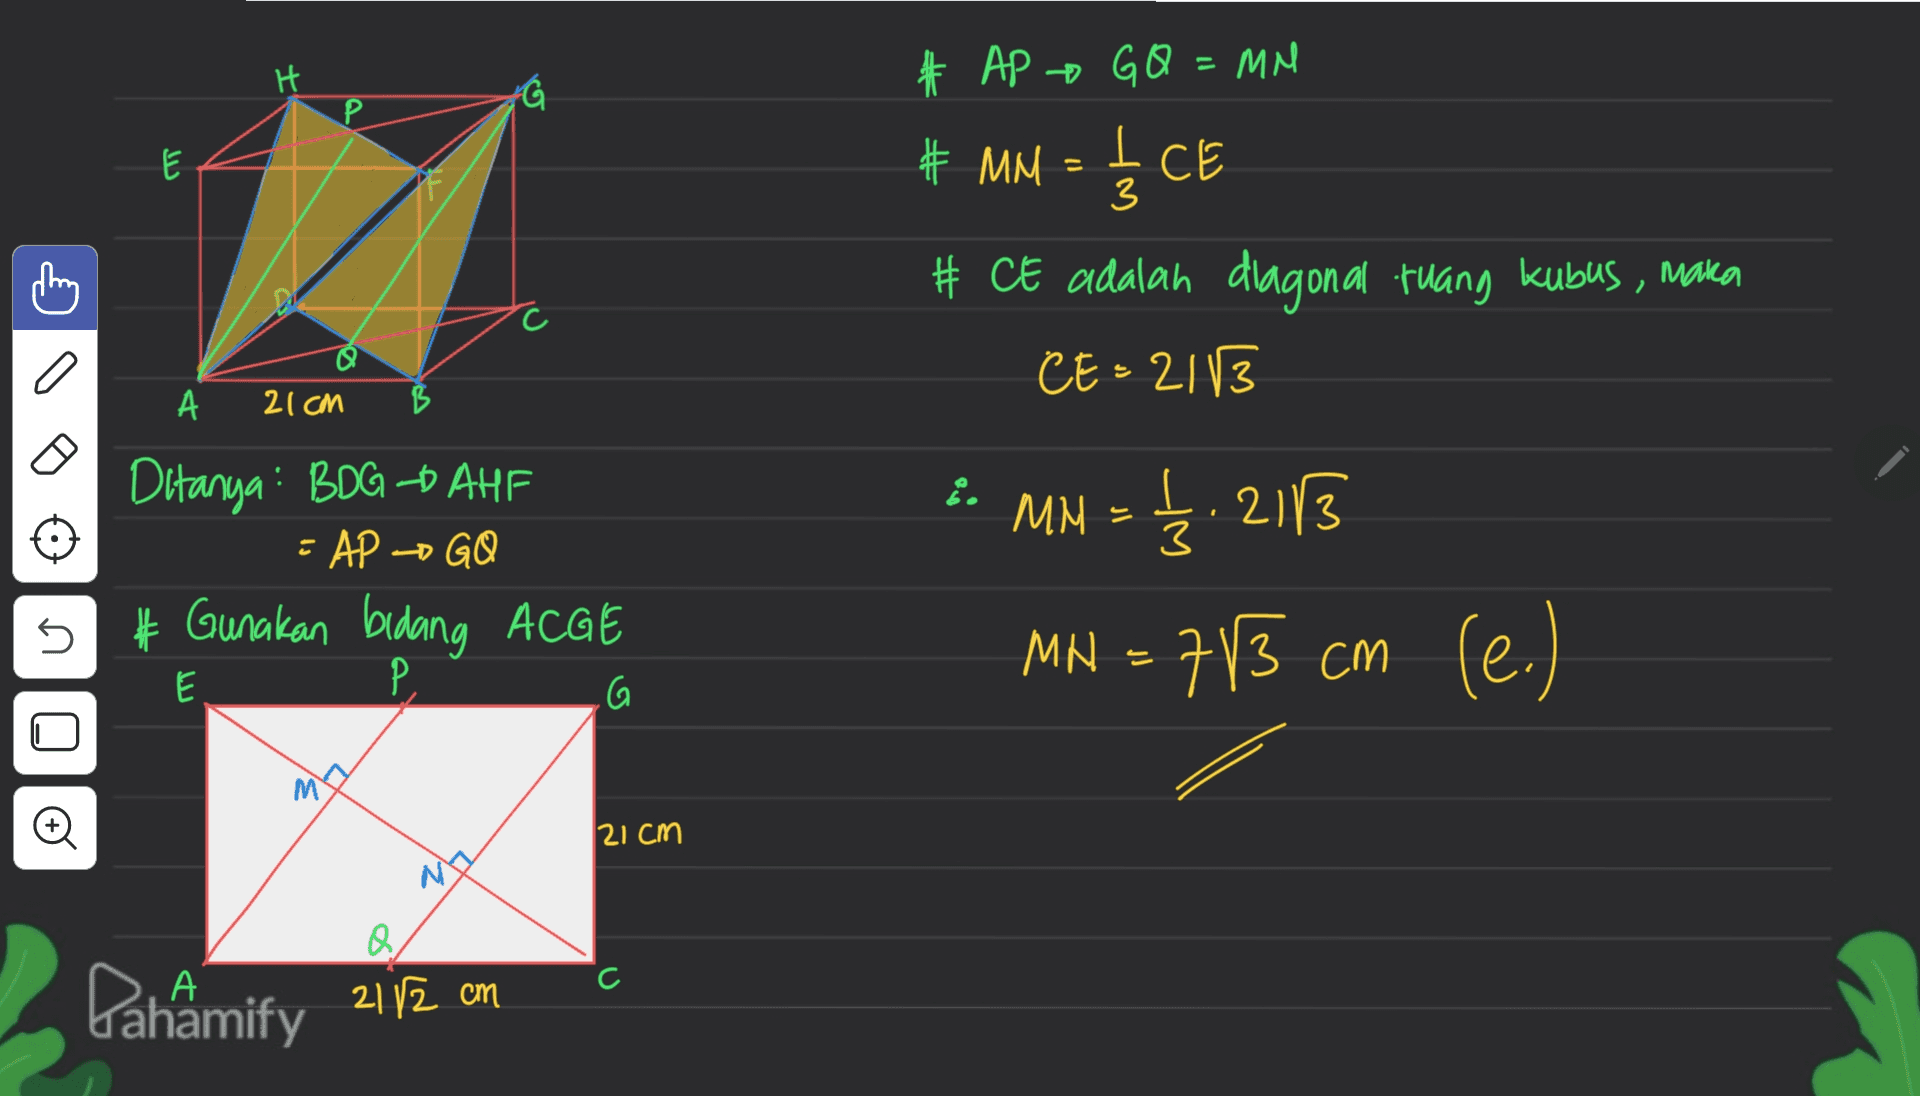 H Р E دا = # AP GQ = MM # MM = I CE 3 # CE adalah diagonal ruang kubus , maka CE=21/3 А 21cm B 3 E Ditanya: BDG-BAHF - AP - GO # Gunakan bidang ACGE 1. MM = L. 2113 MN = 783 cm 5 (e.) ) E P G 21cm Pahamify 2172 cm 